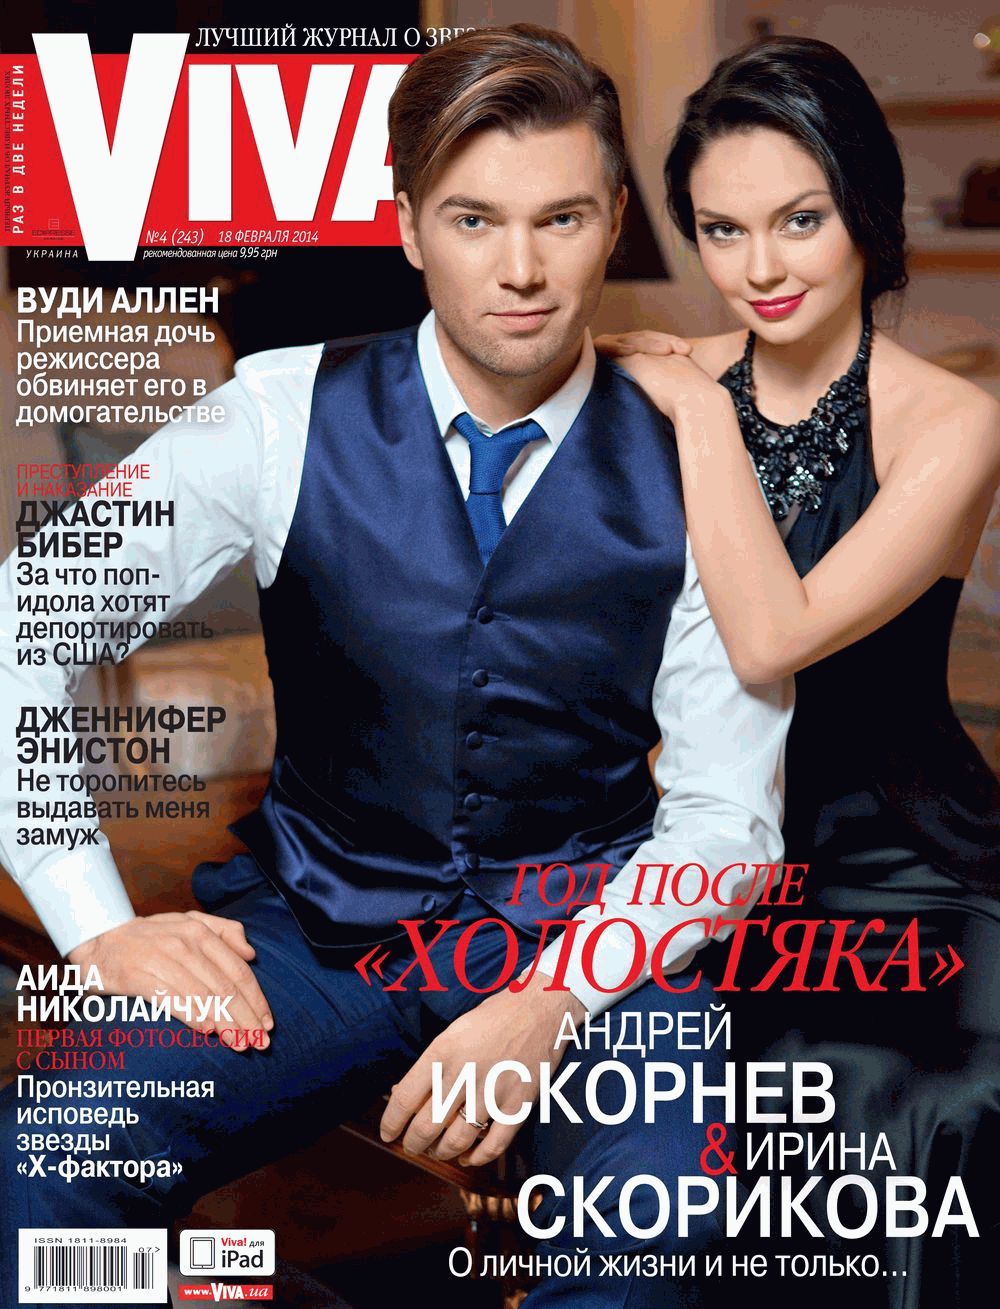 Андрей Искорнев и Ирина Скорикова обложка